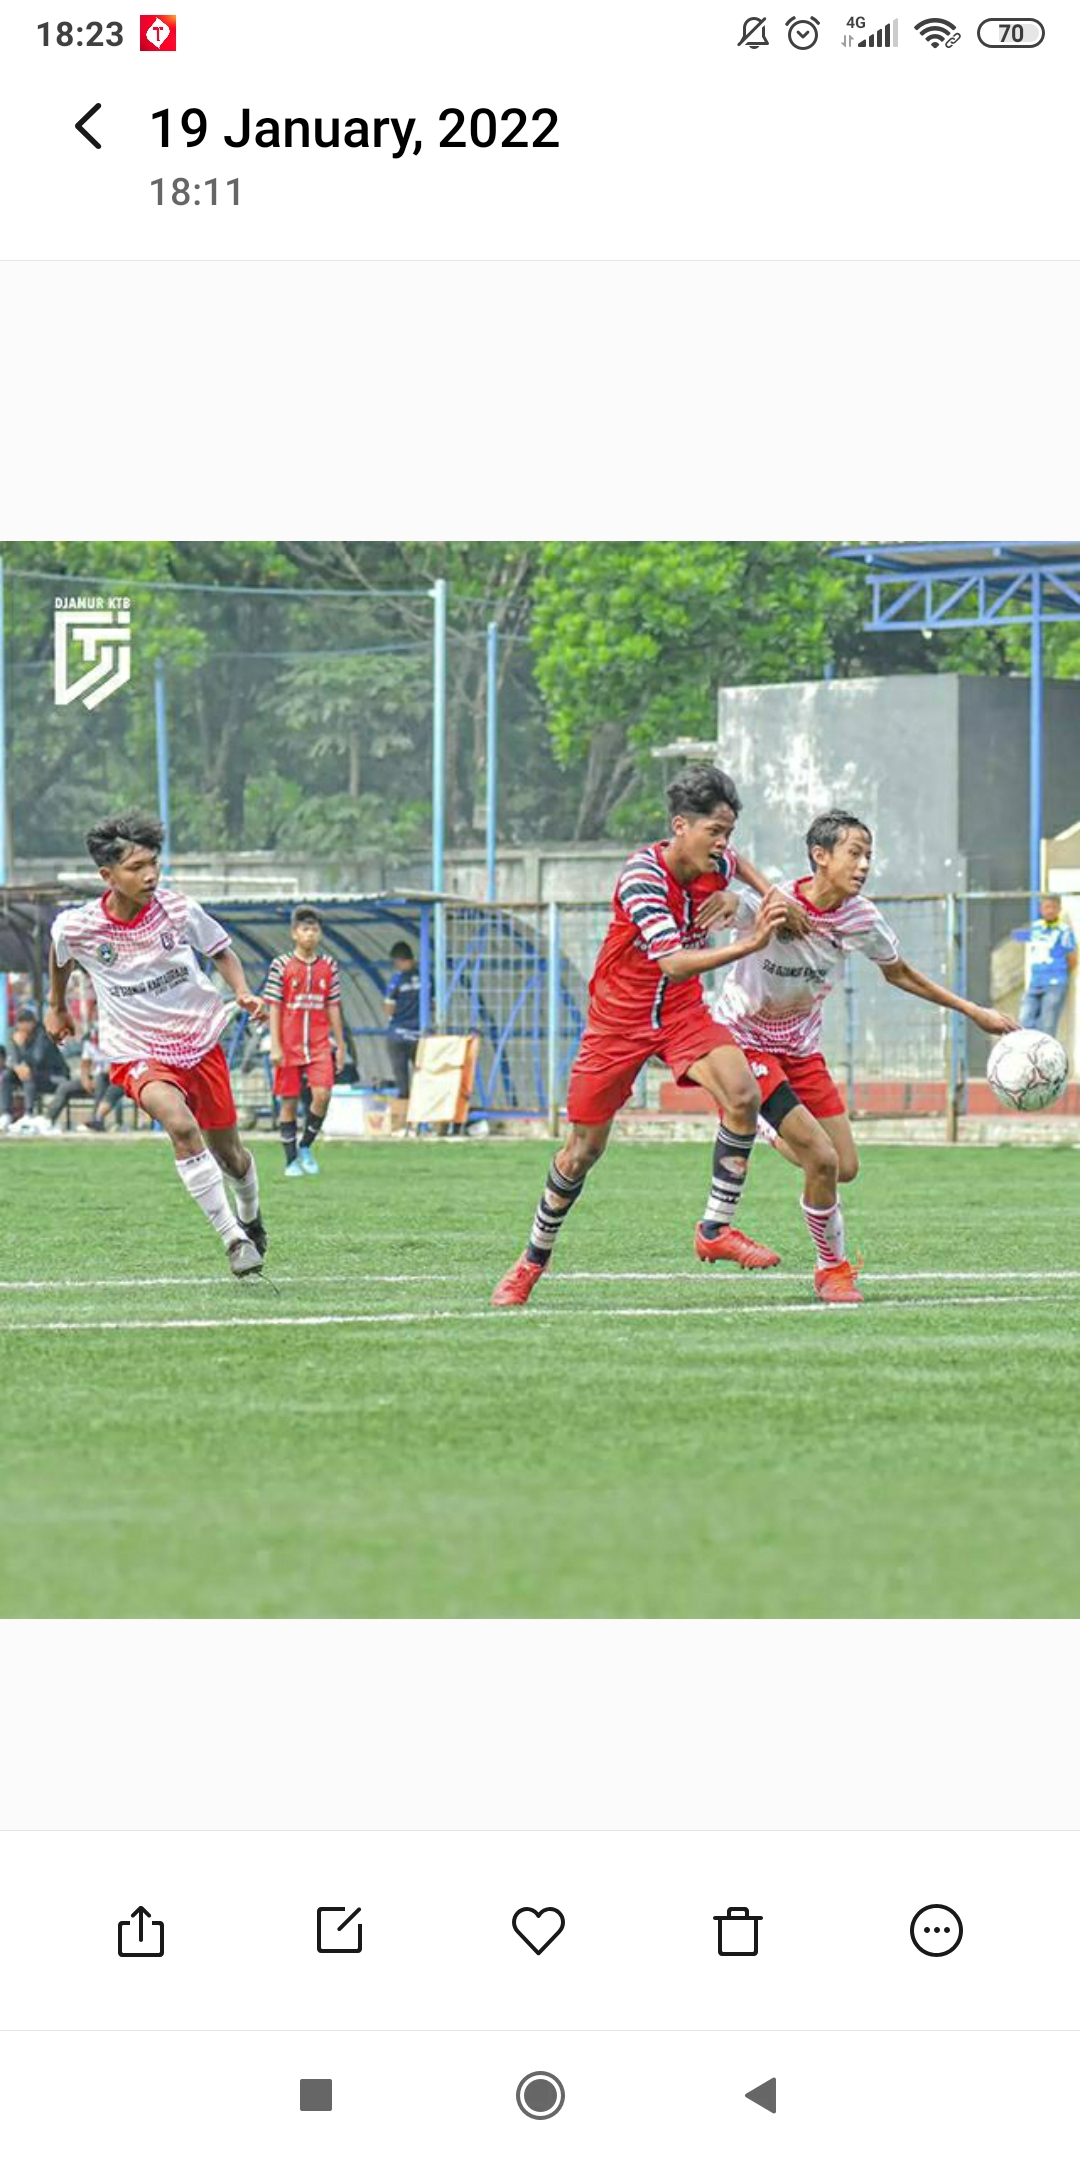 Liga TopSkor U-15 Bandung: Usaha Djanur Kartabraja FC Lanjutkan Start Positif